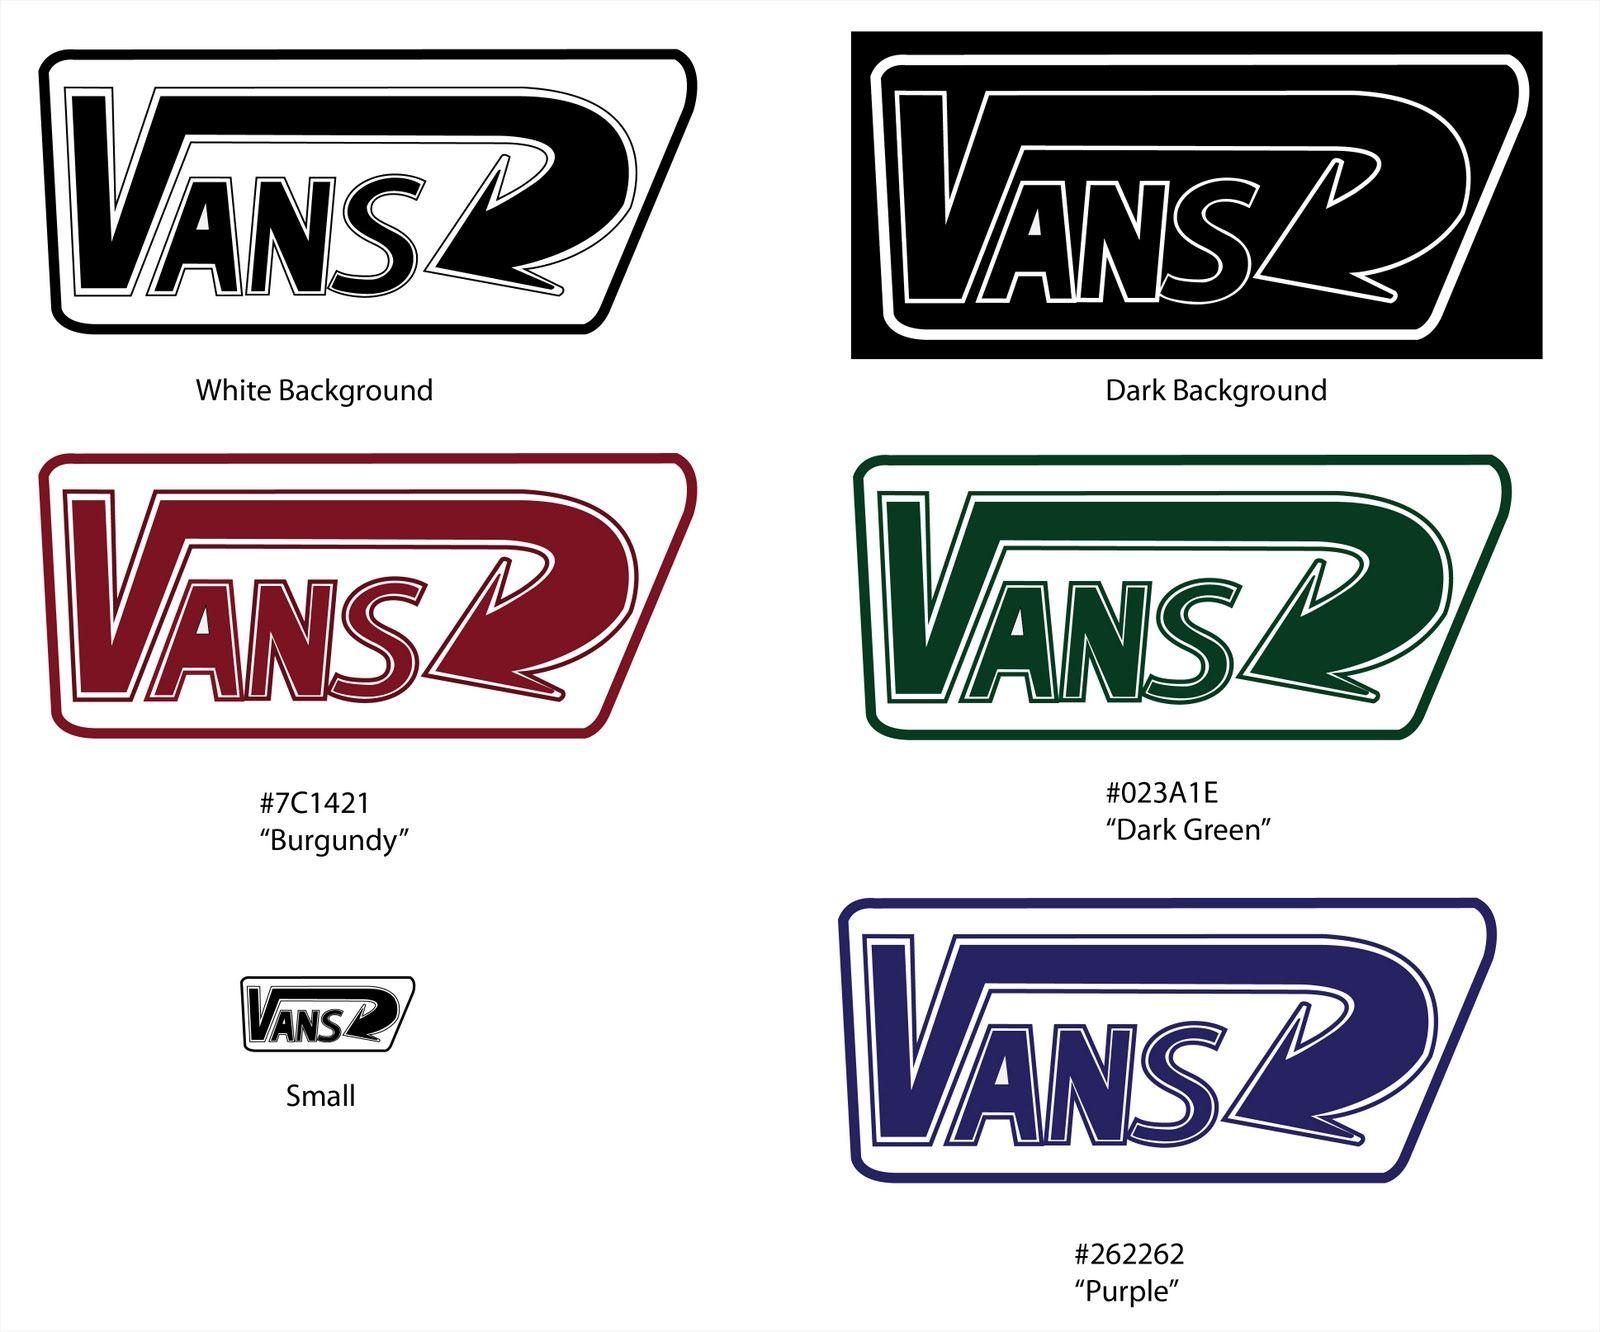 Small Vans Logo - Gallery 91 Inc.: VANS Logo Re Brand: Final Design